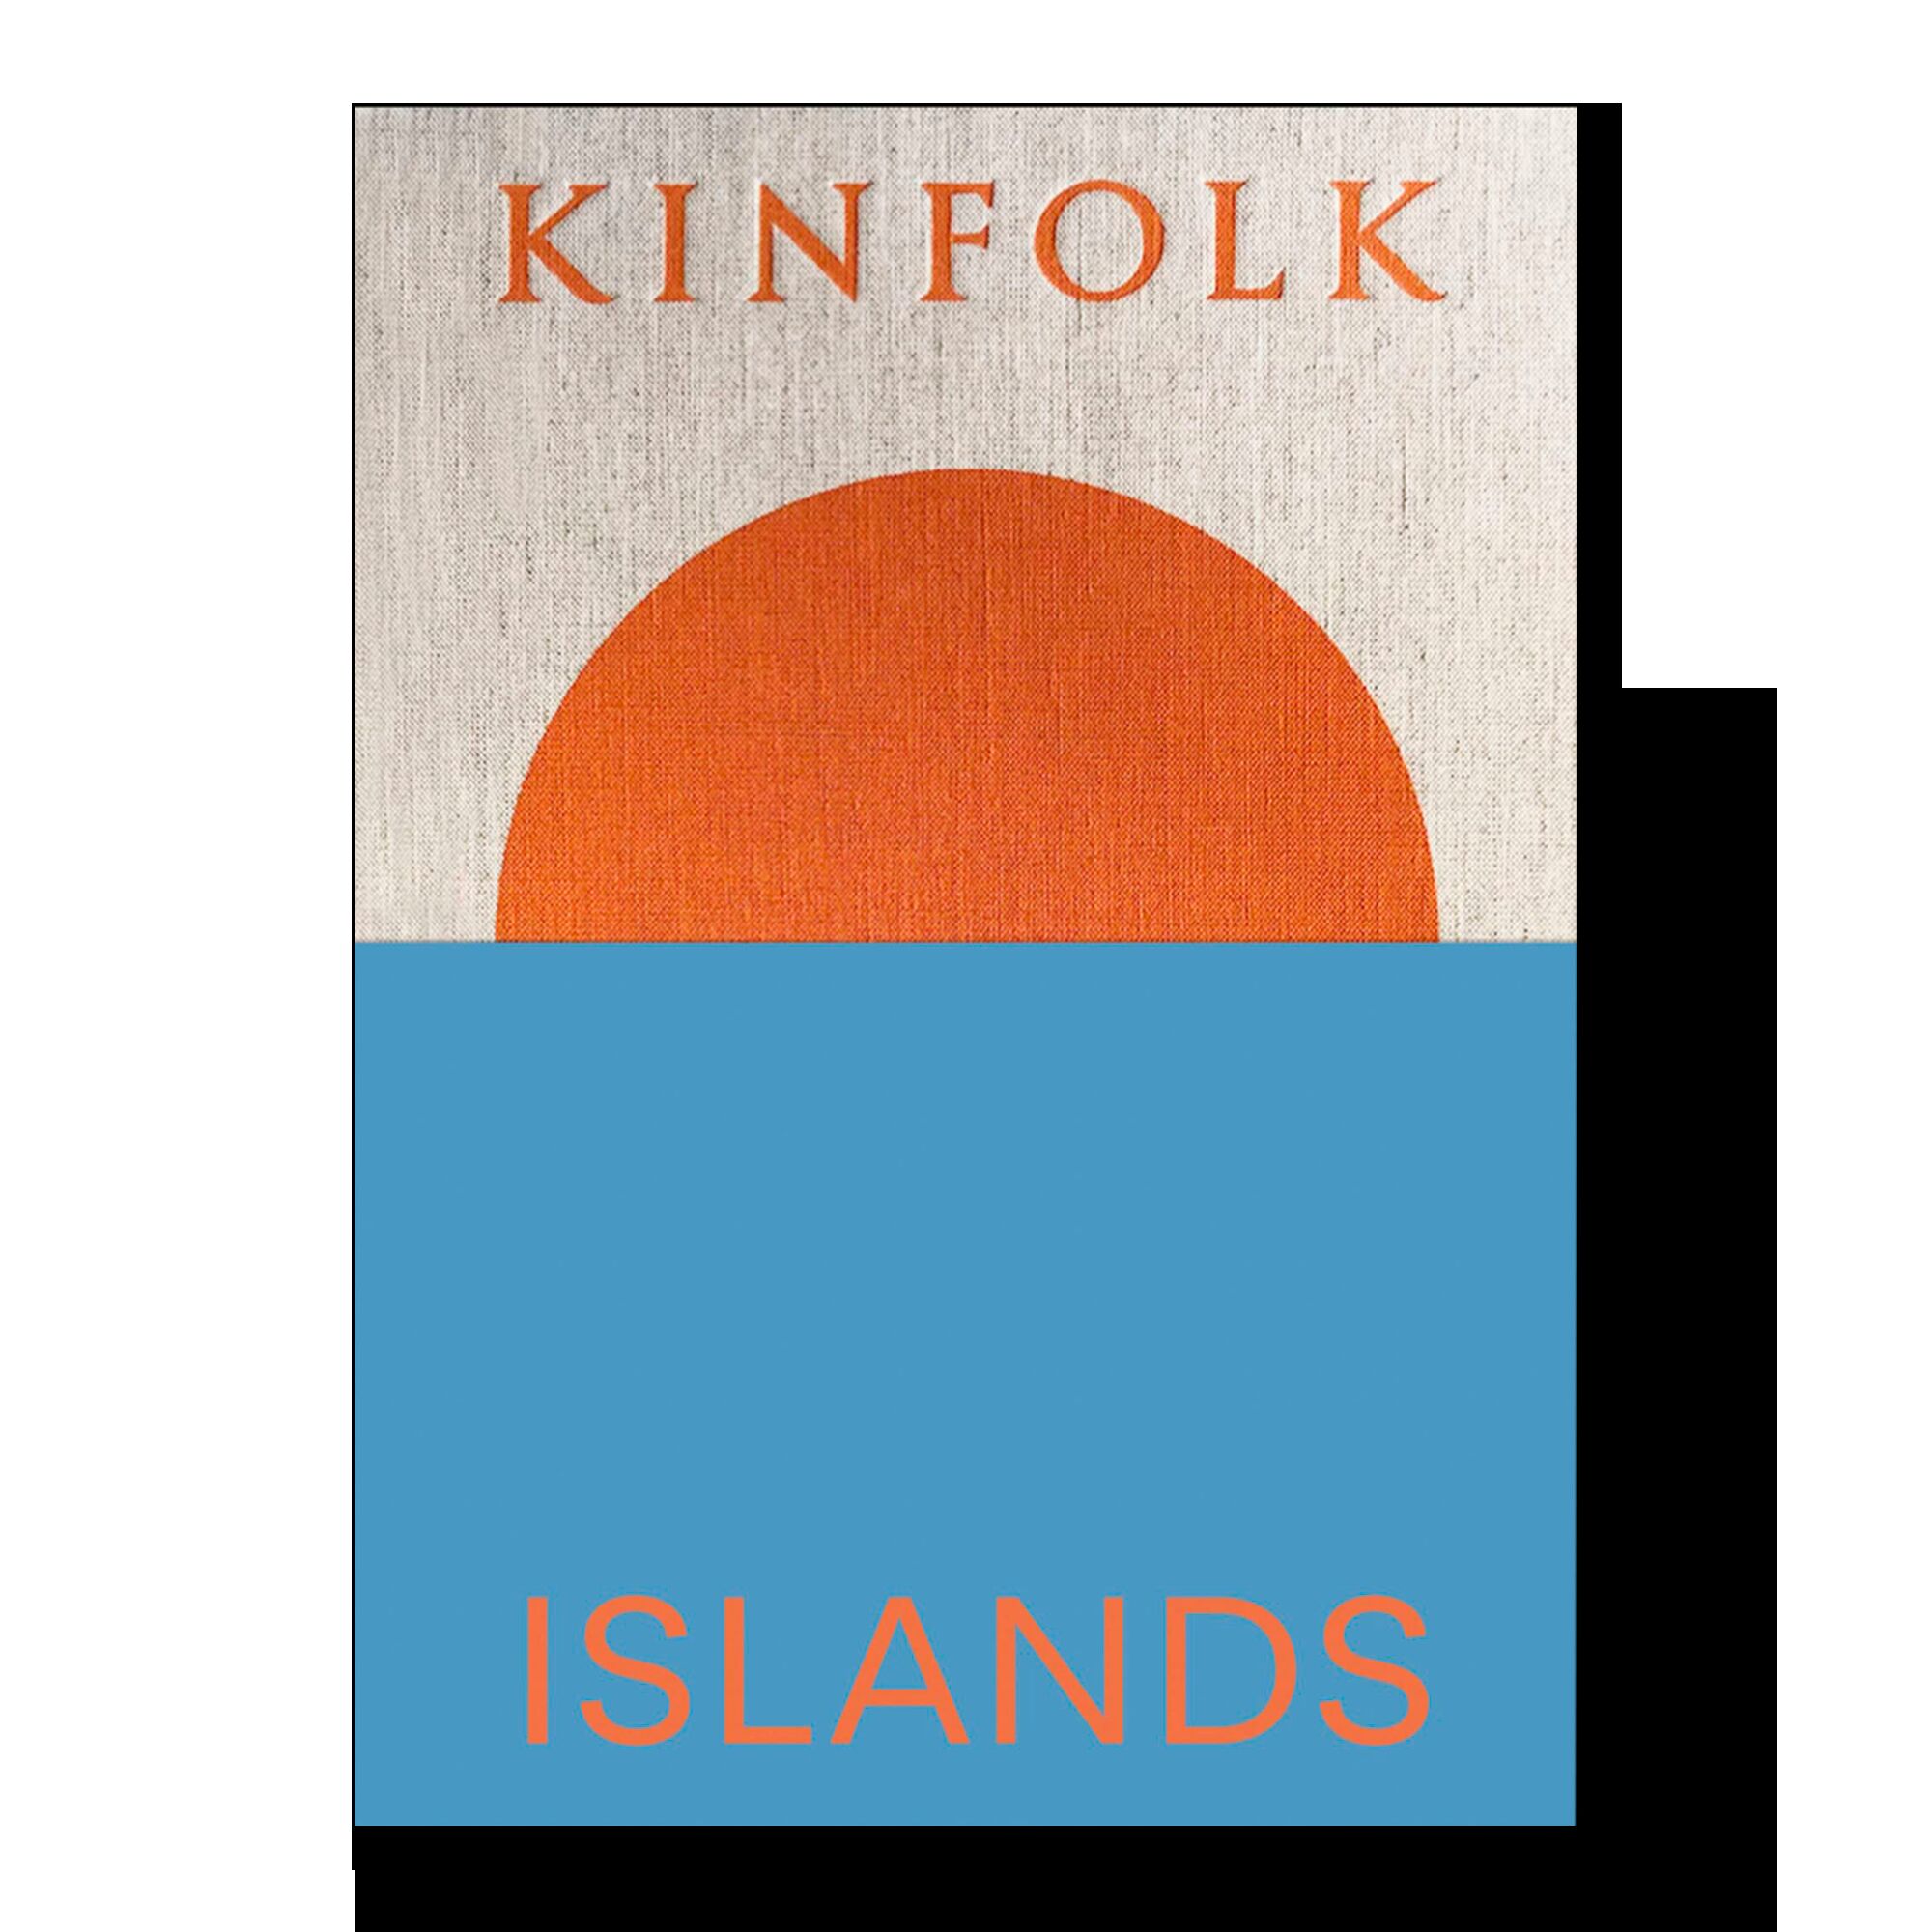 The Kinfolk Islands